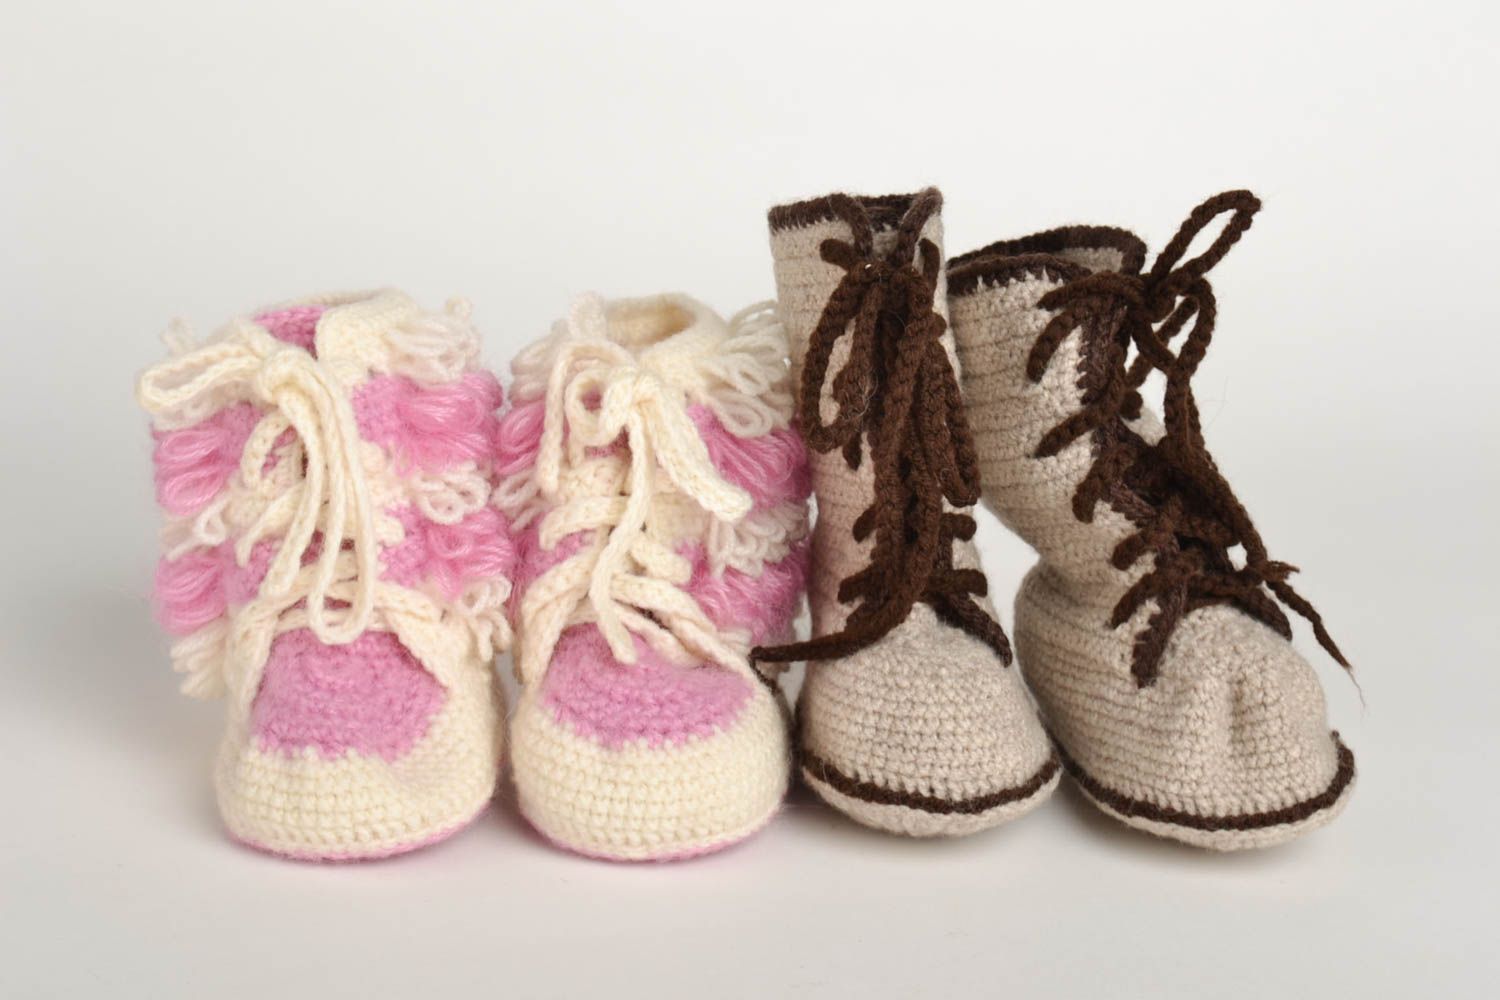 Unusual handmade baby bootees crochet baby booties design fashion kids photo 2